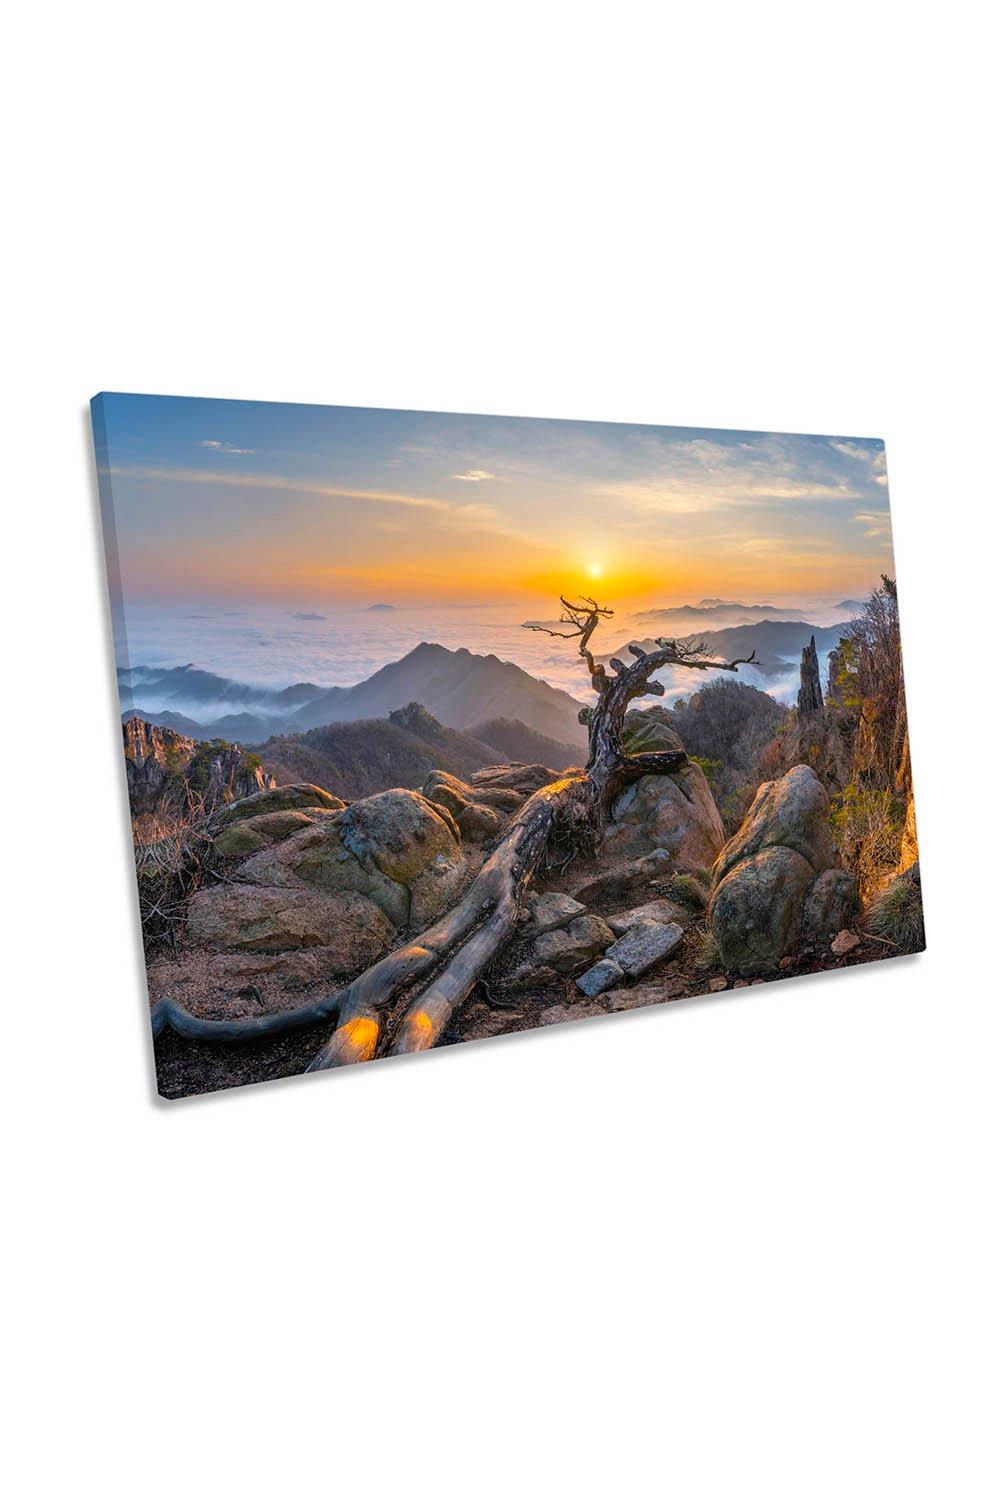 Dead Pine Mountains Sunset Landscape Canvas Wall Art Picture Print